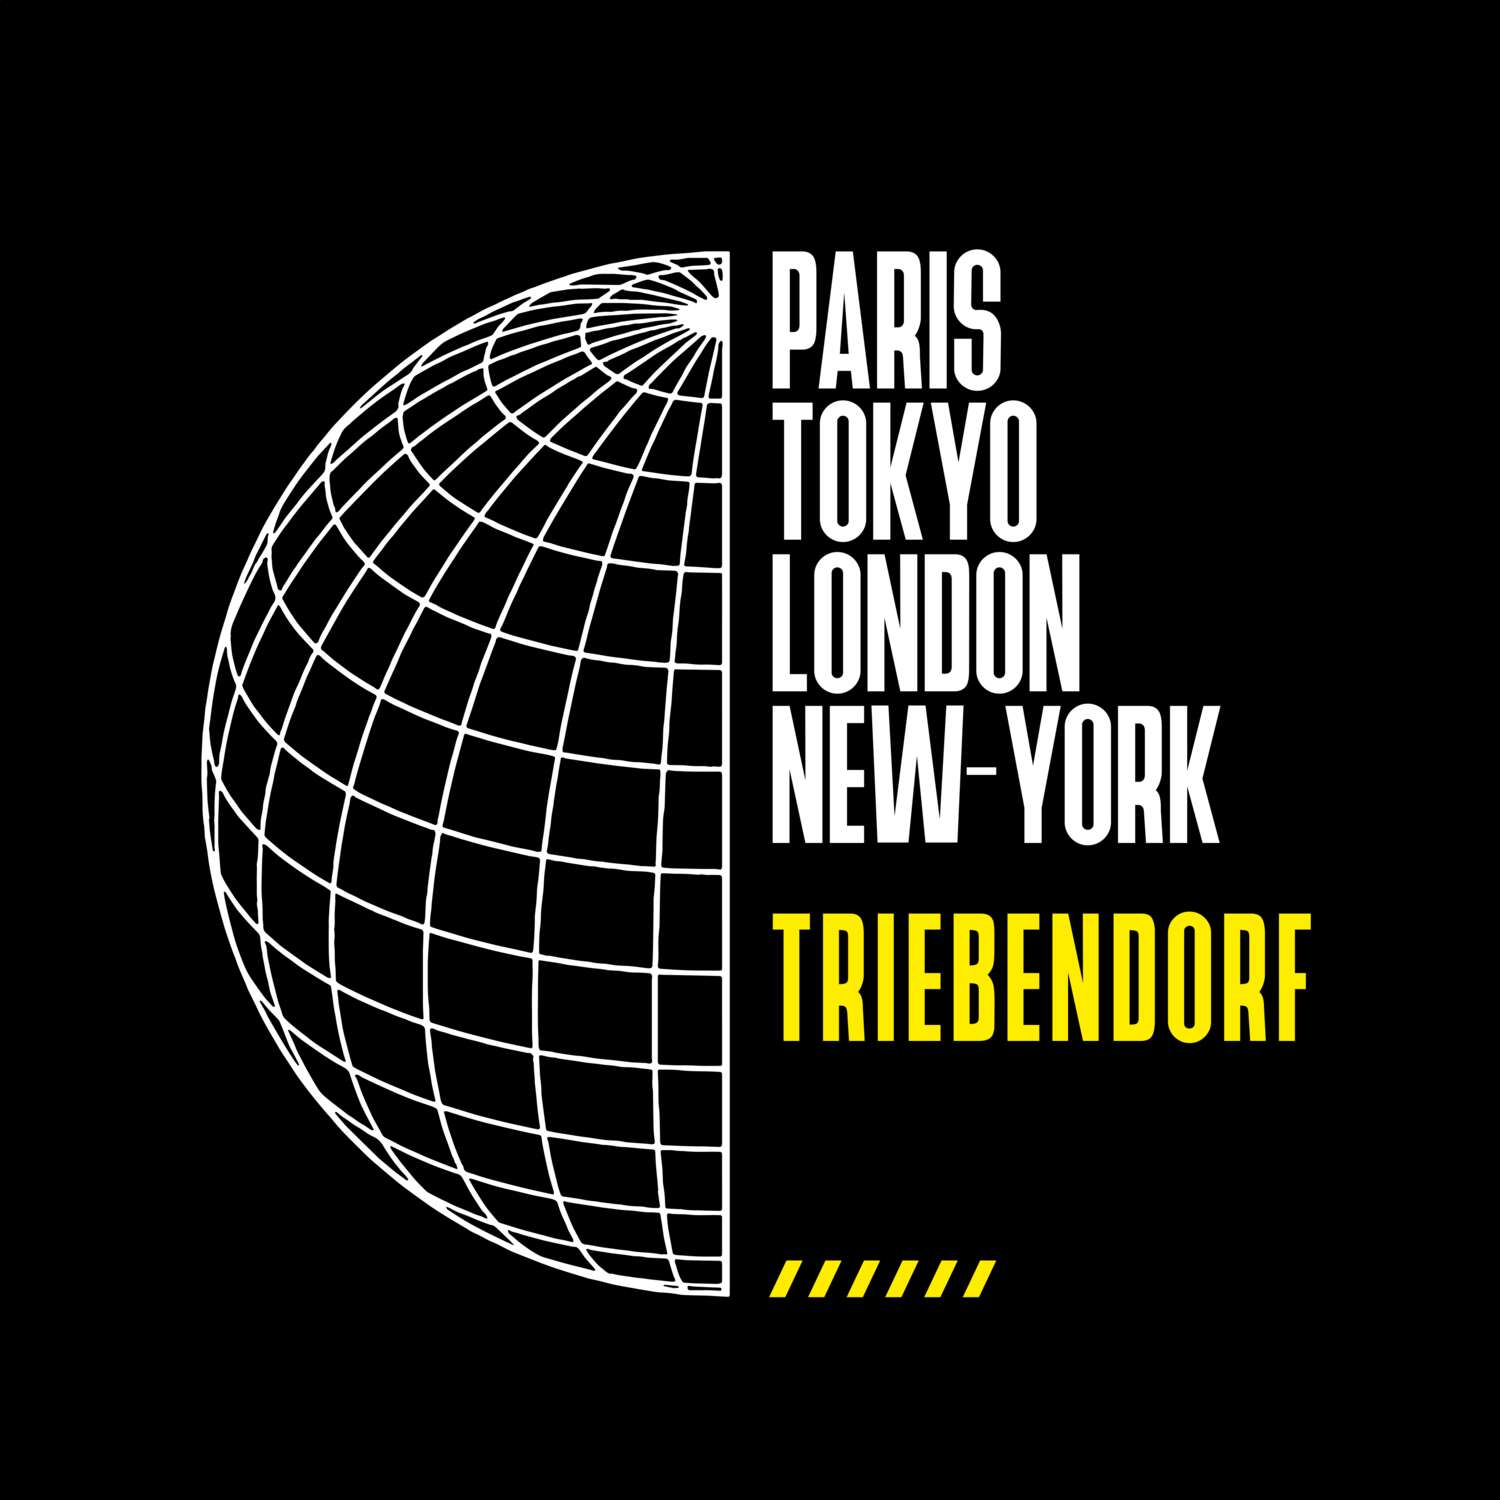 Triebendorf T-Shirt »Paris Tokyo London«